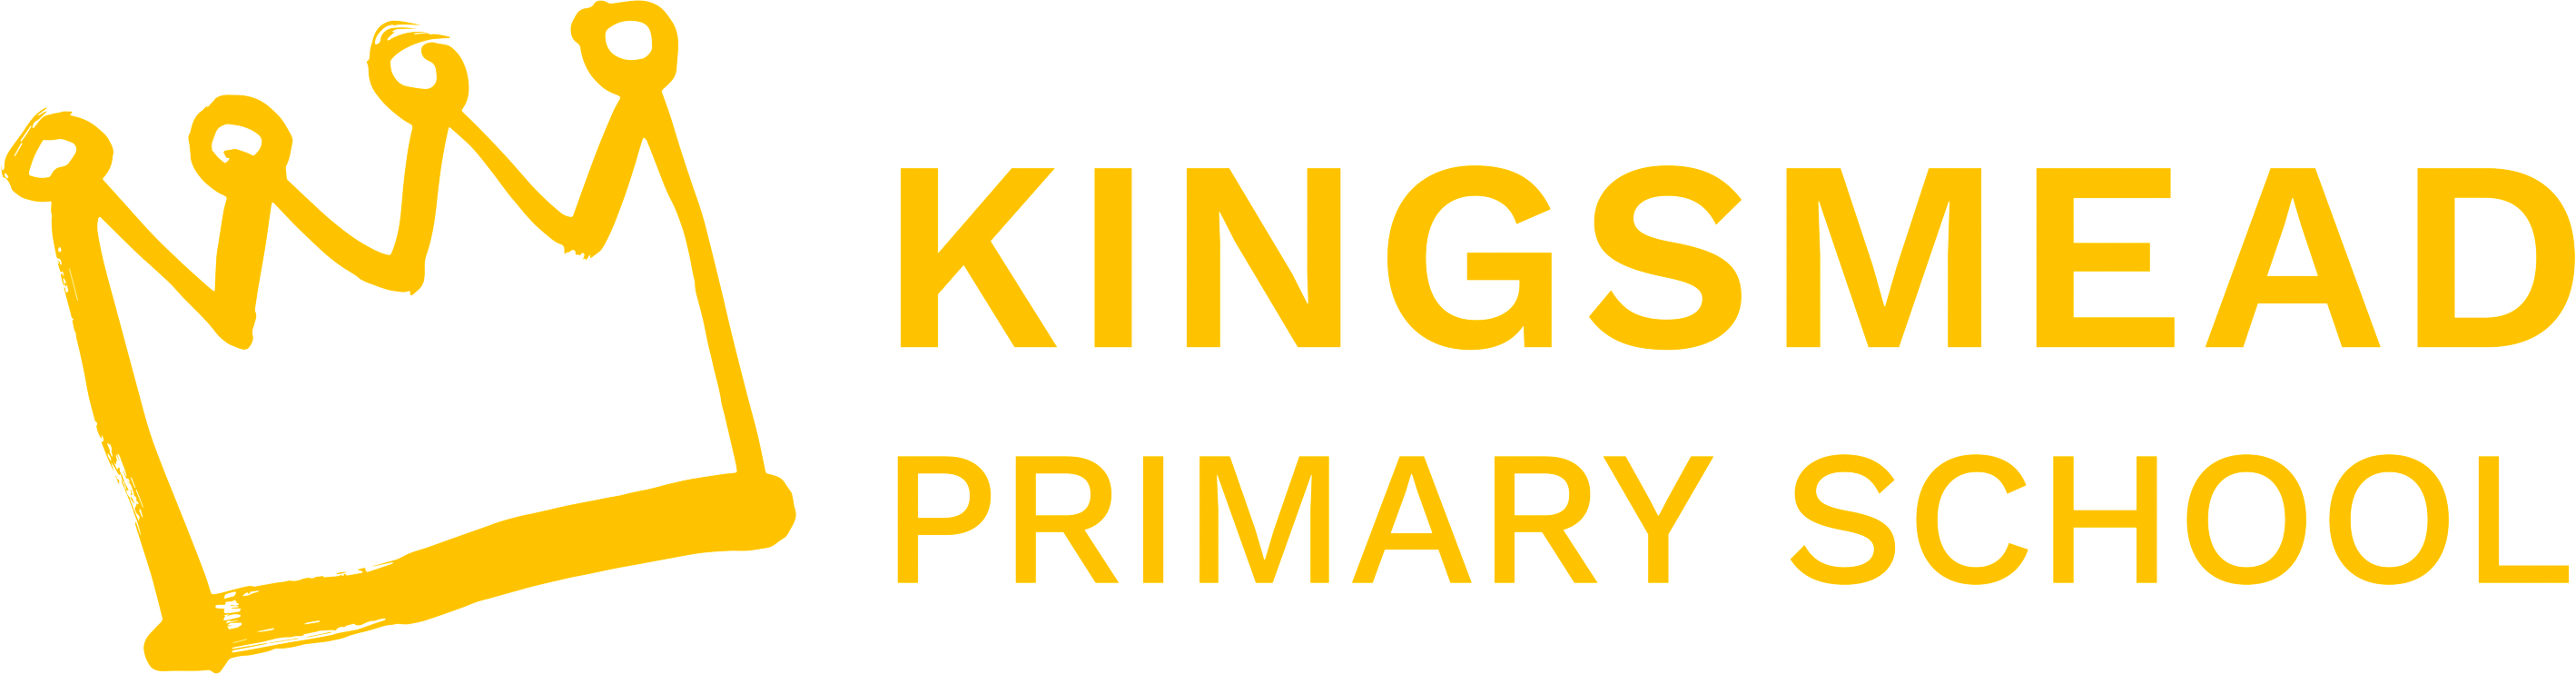 Kingsmead Primary